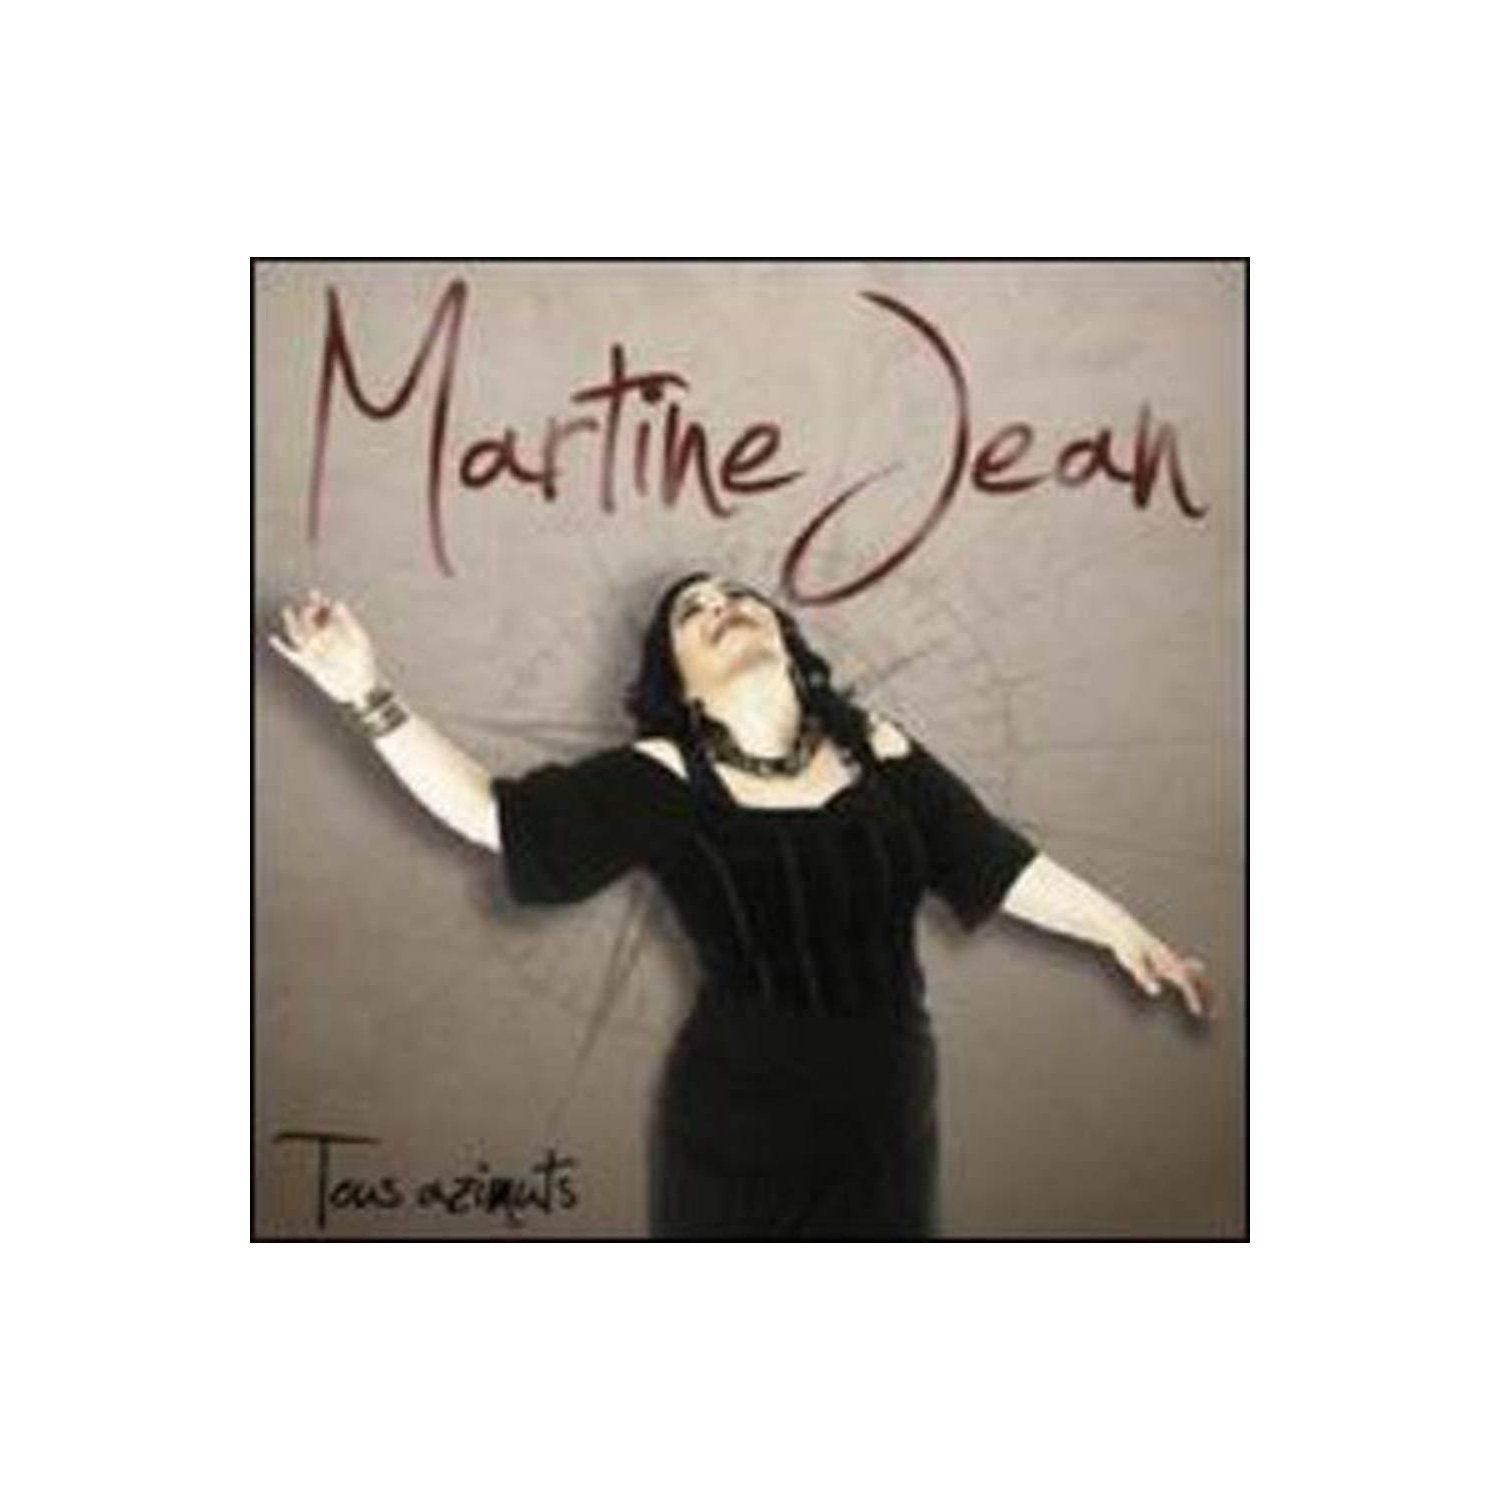 Tous Azimuts [Audio CD] Martine Jean